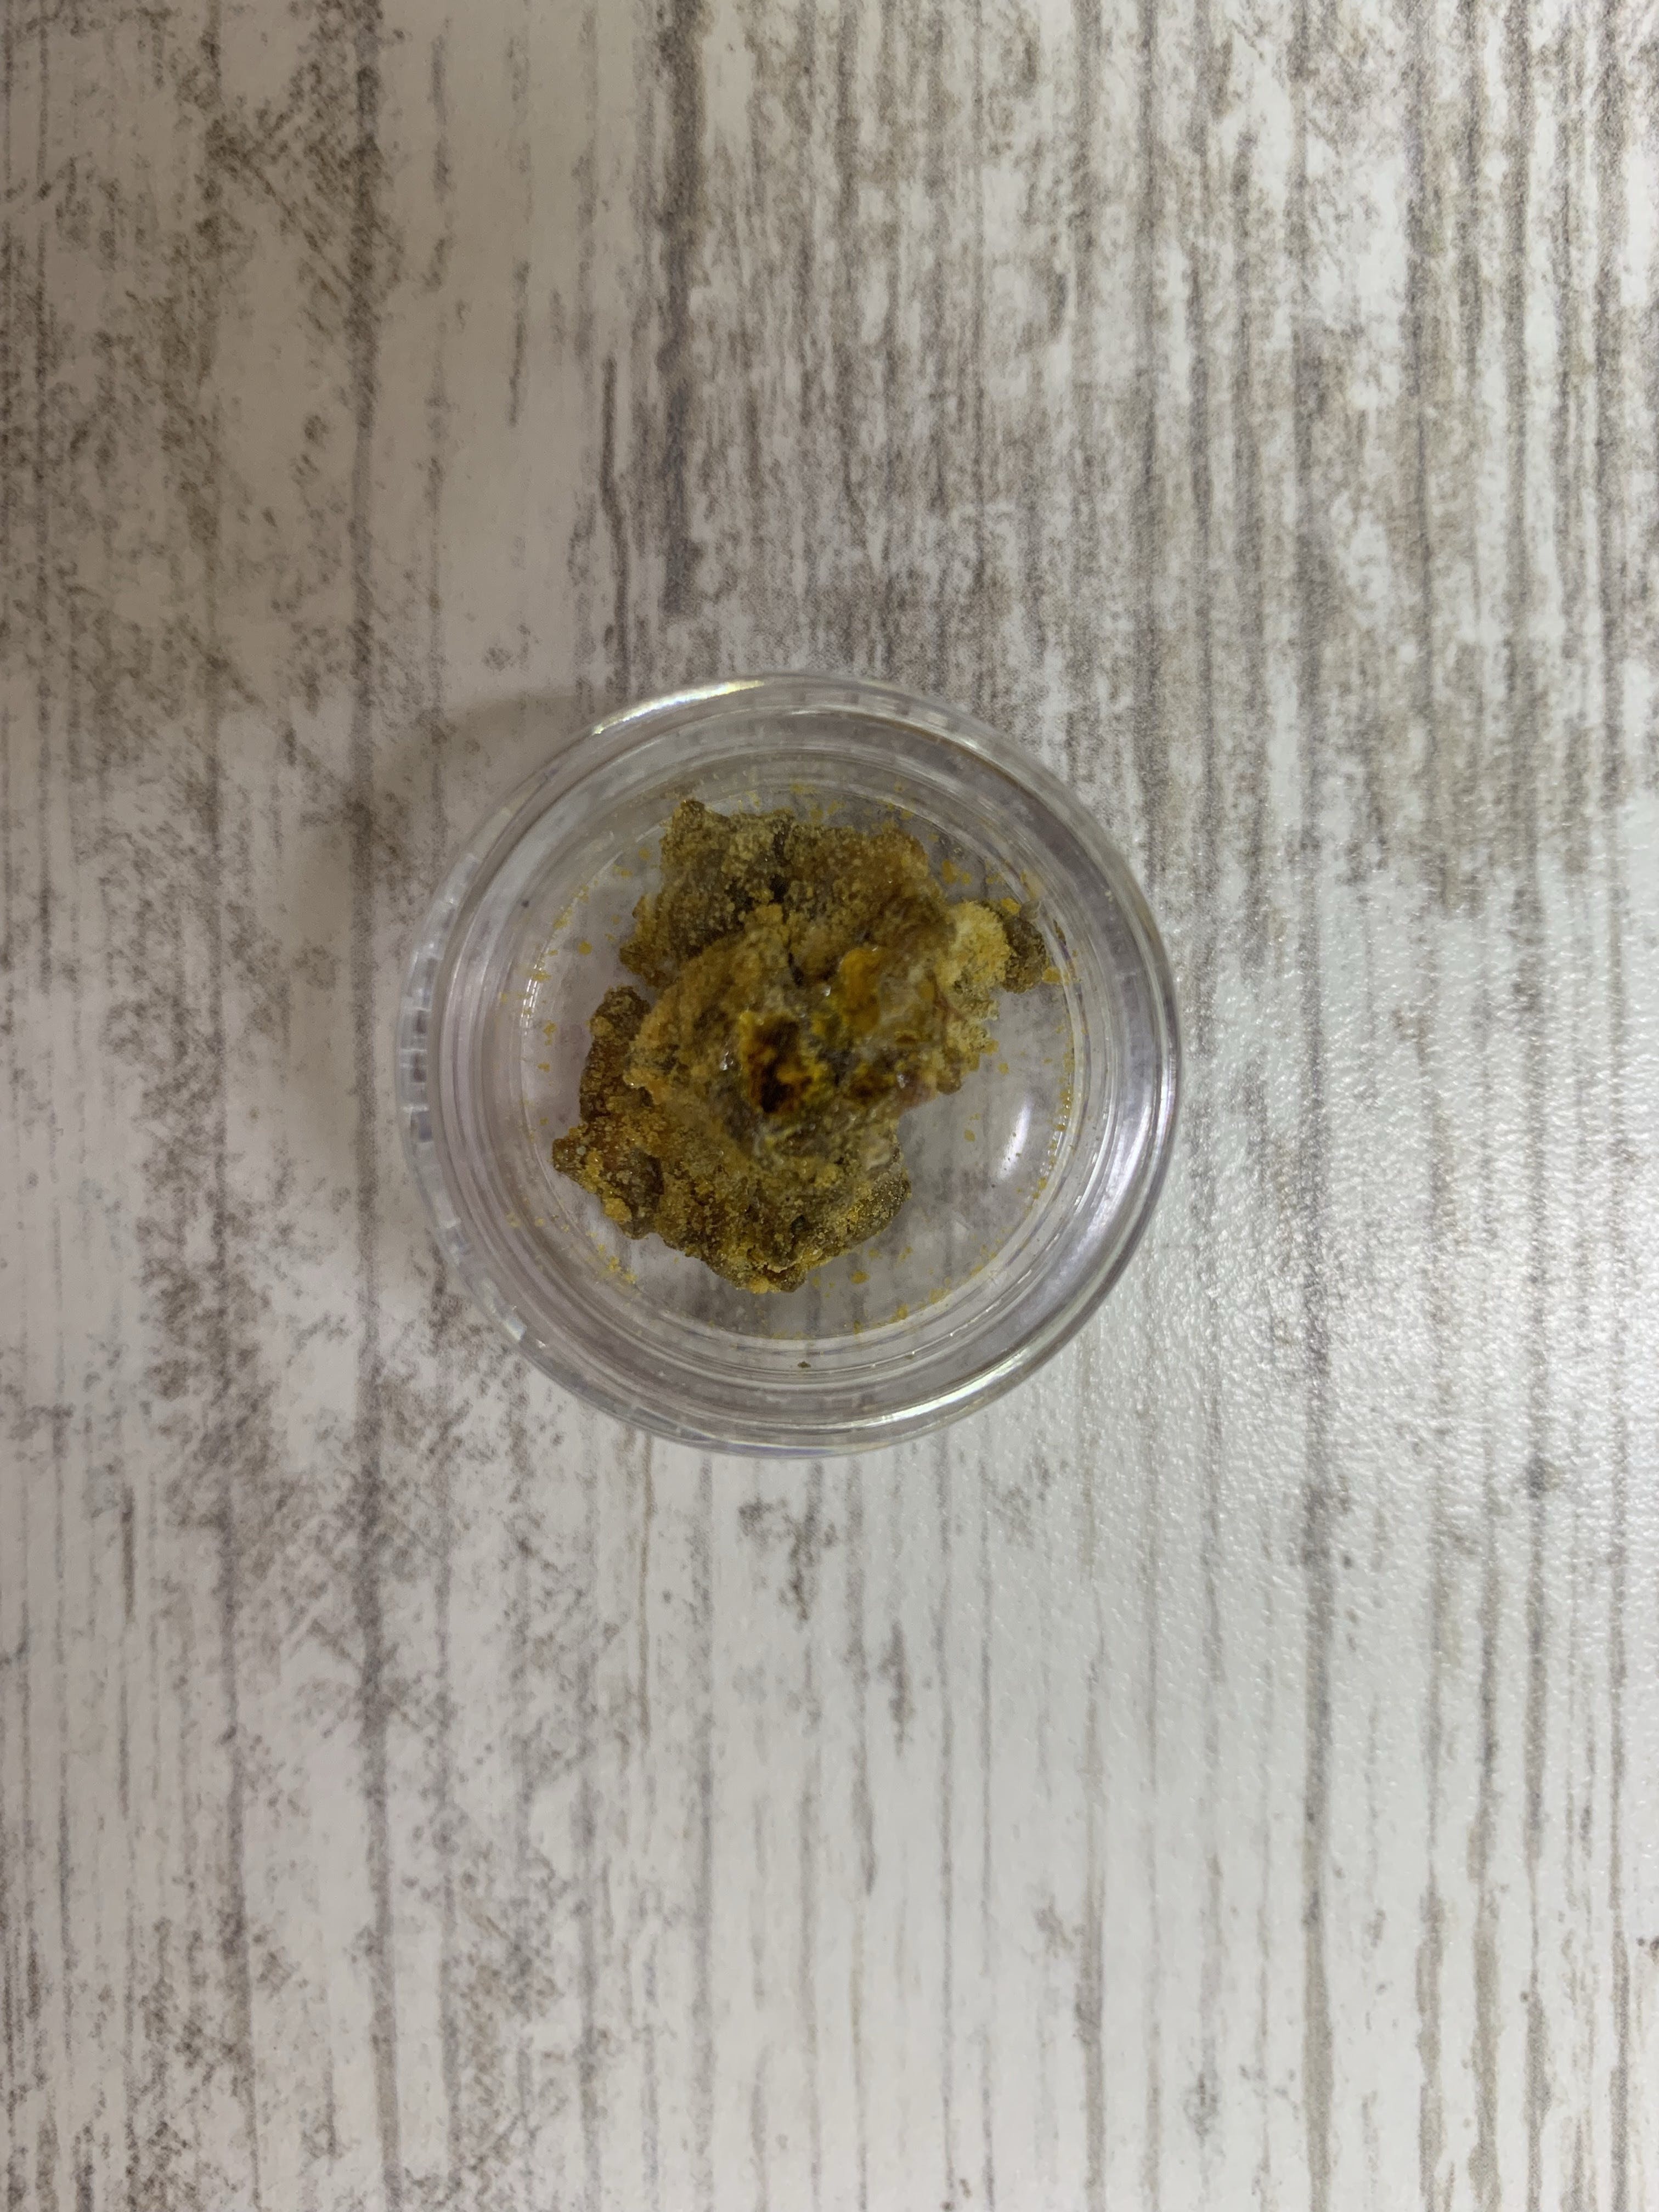 marijuana-dispensaries-the-health-teapot-2c-carr-115-km-11-6-bo-pueblo-rincon-acapulco-gold-meteor